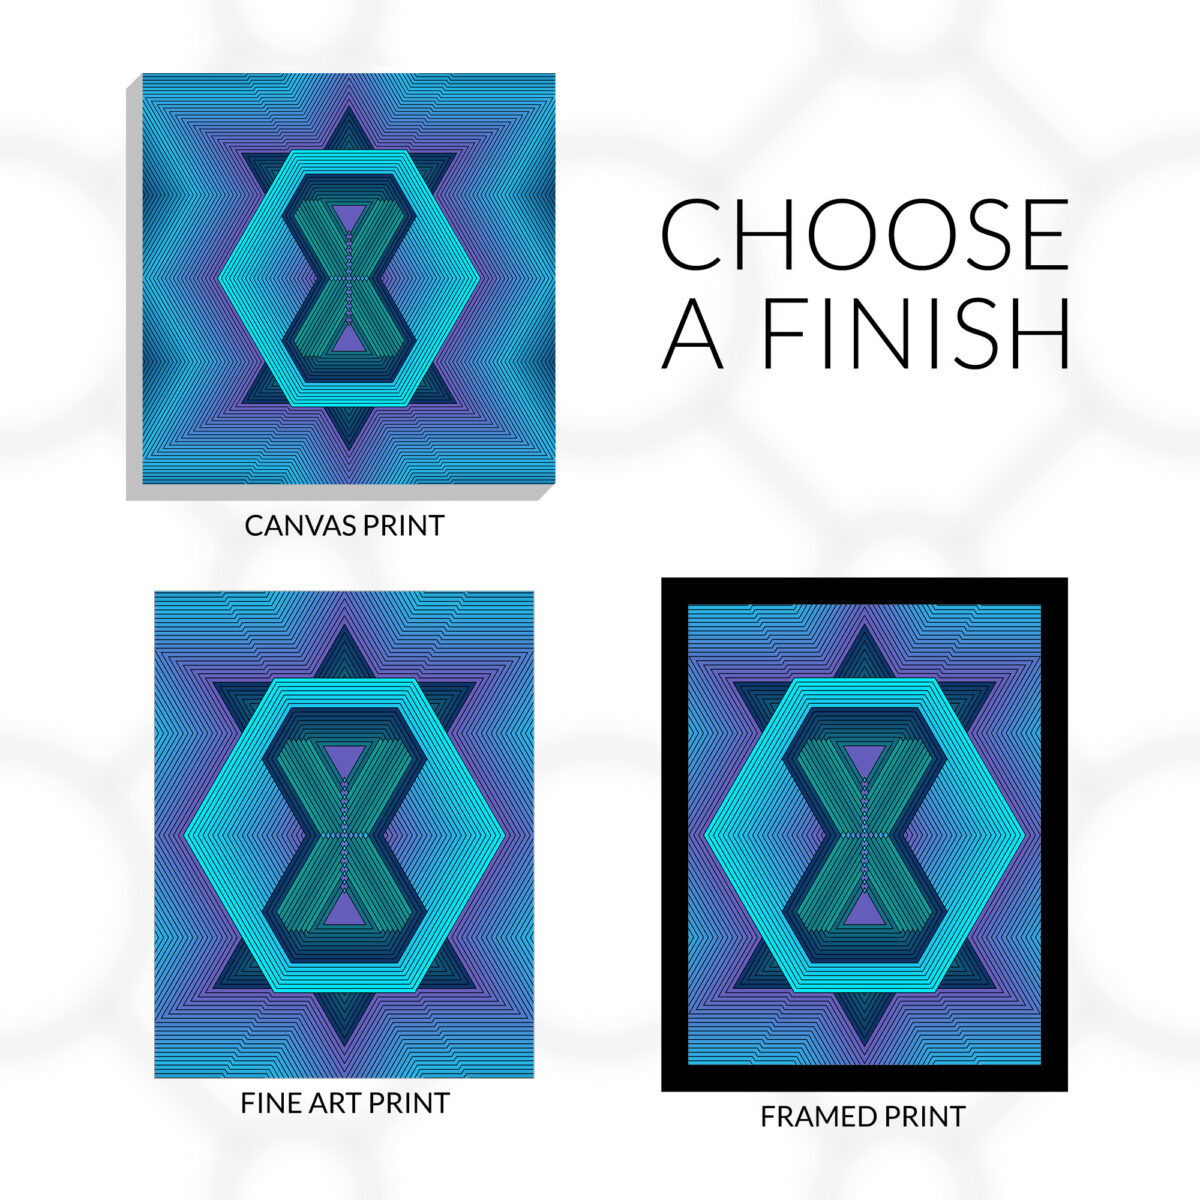 Aquamarine design choose a finish. Canvas print, fine art print, or framed fine art print.